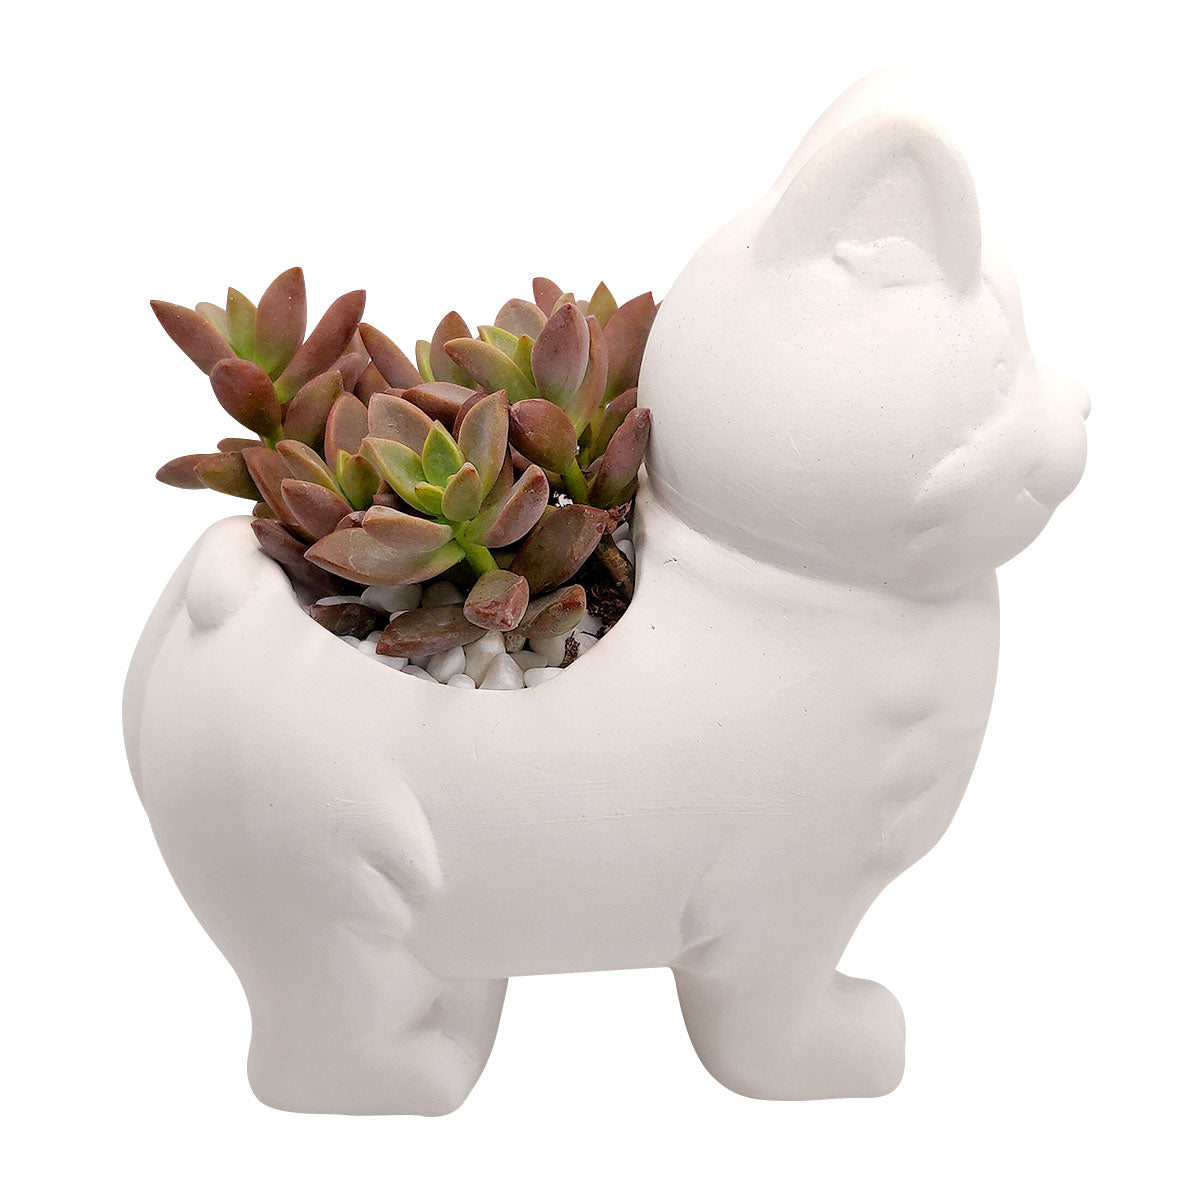 DIY Ceramic Kitty Pot for sale, White Ceramic Dog Planter Pot, Unique Succulent Gift, craft supplies, dog shaped planter pot, succulent pot plant pot DIY pot